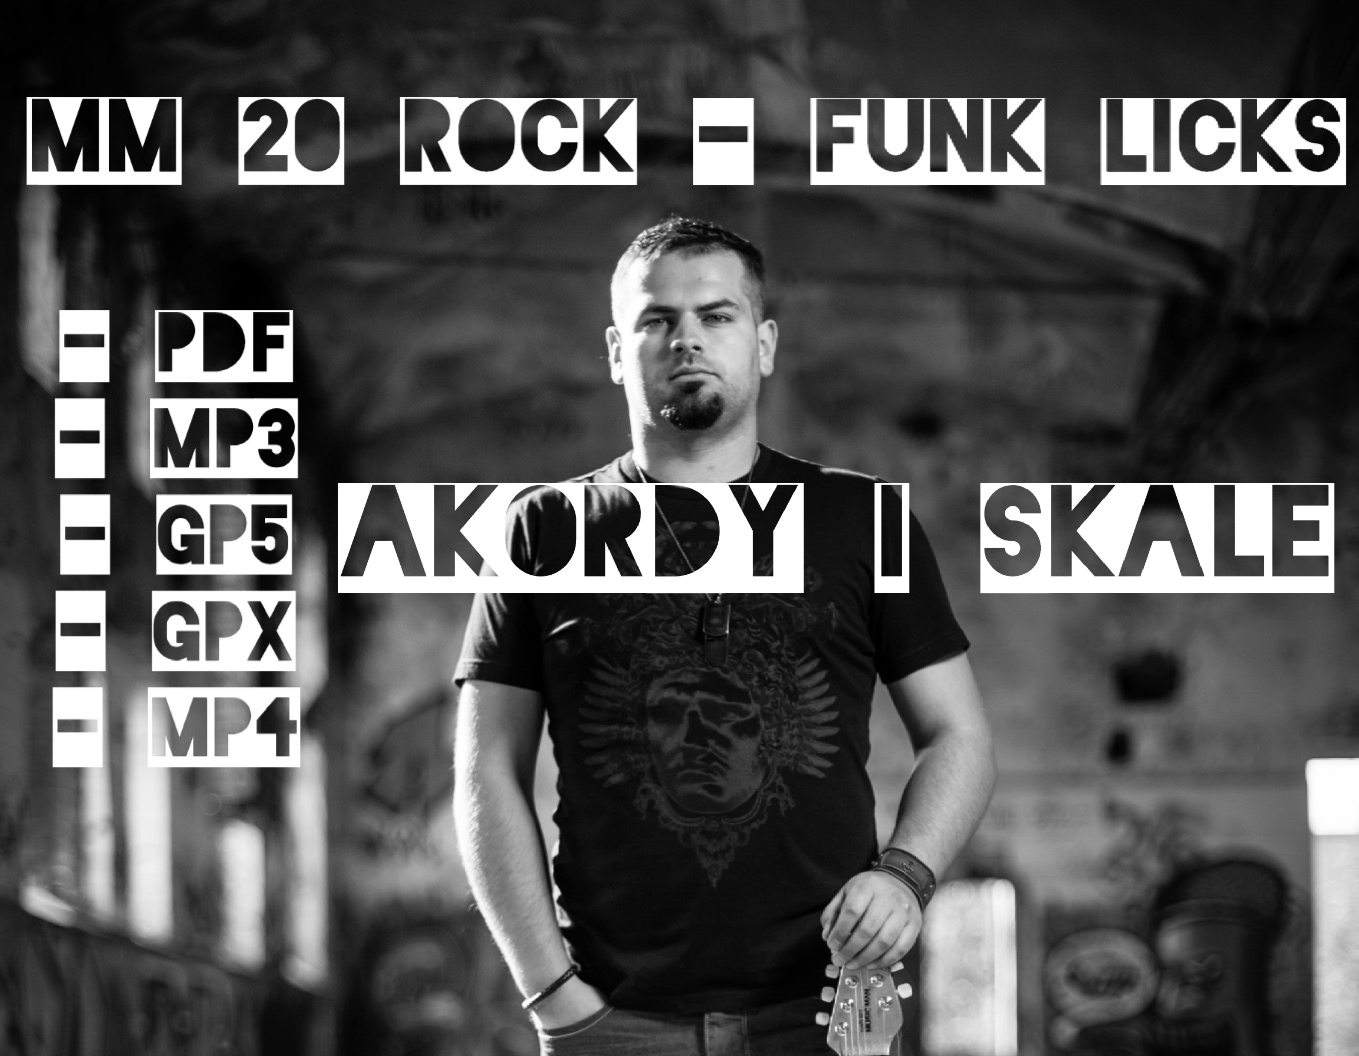 MM 20 Rock-Funk Licks, AKORDY i SKALE - Omówienie.